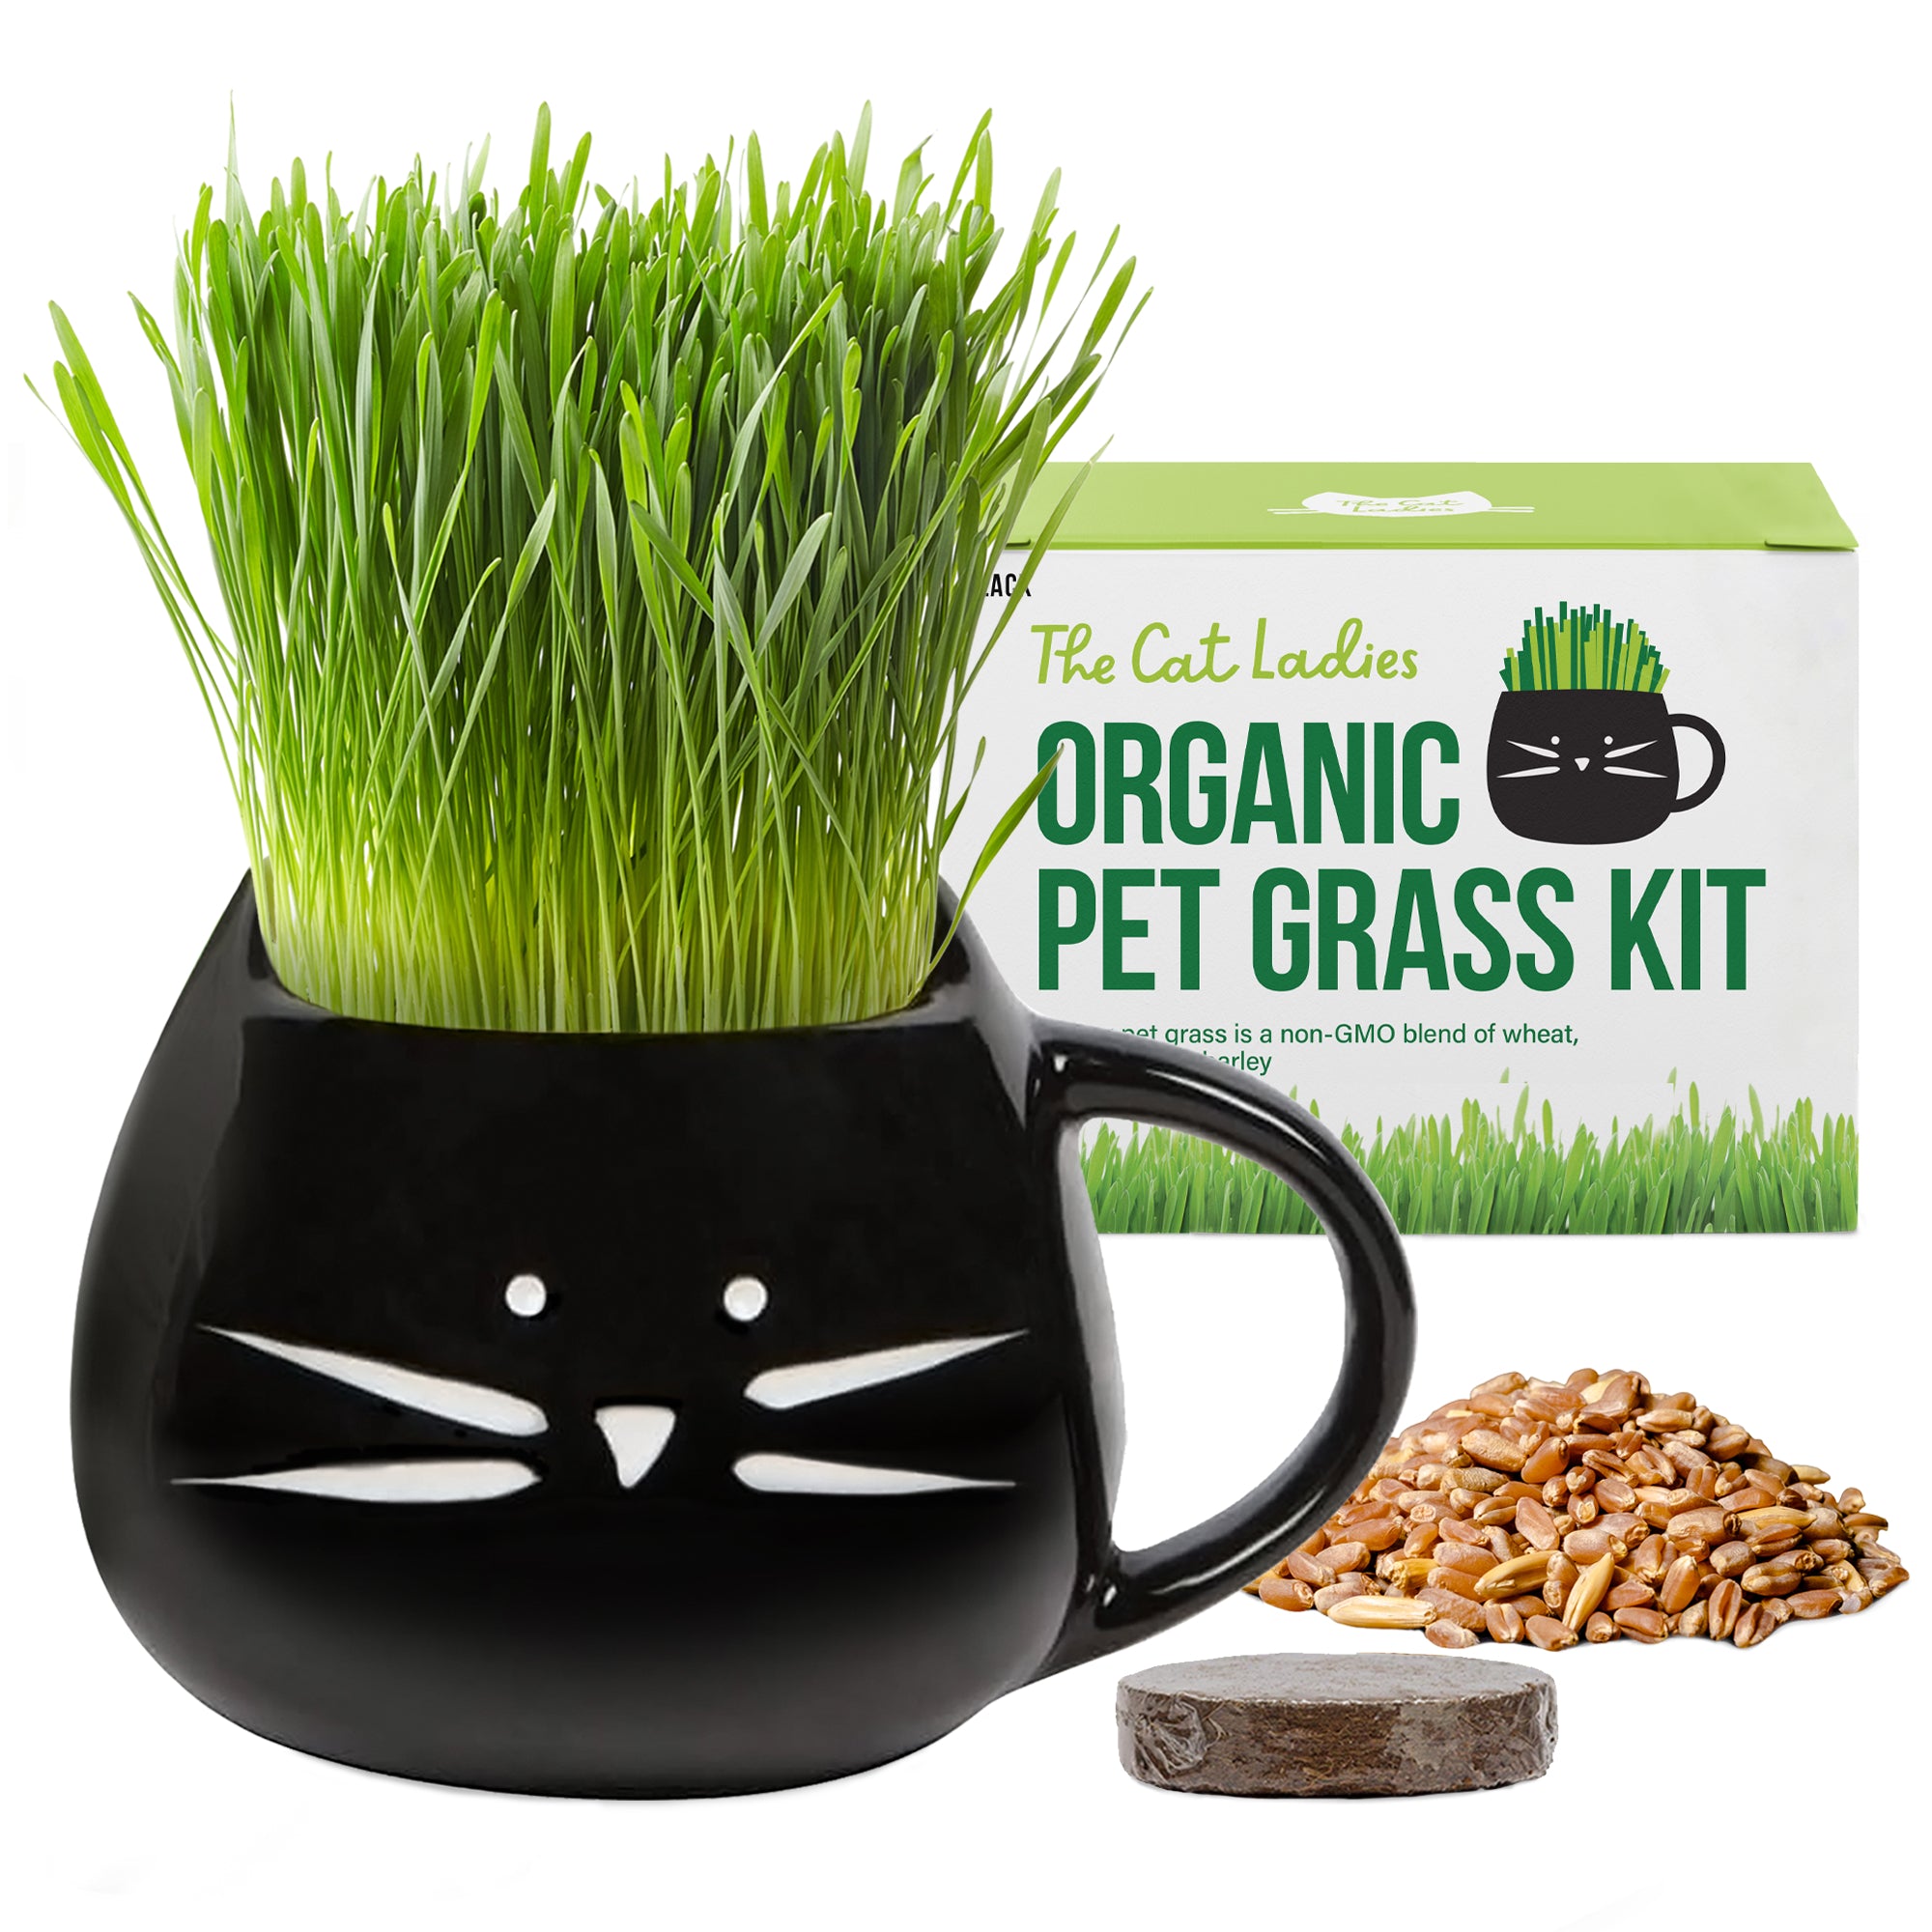 Organic cat grass kit in black cat mug